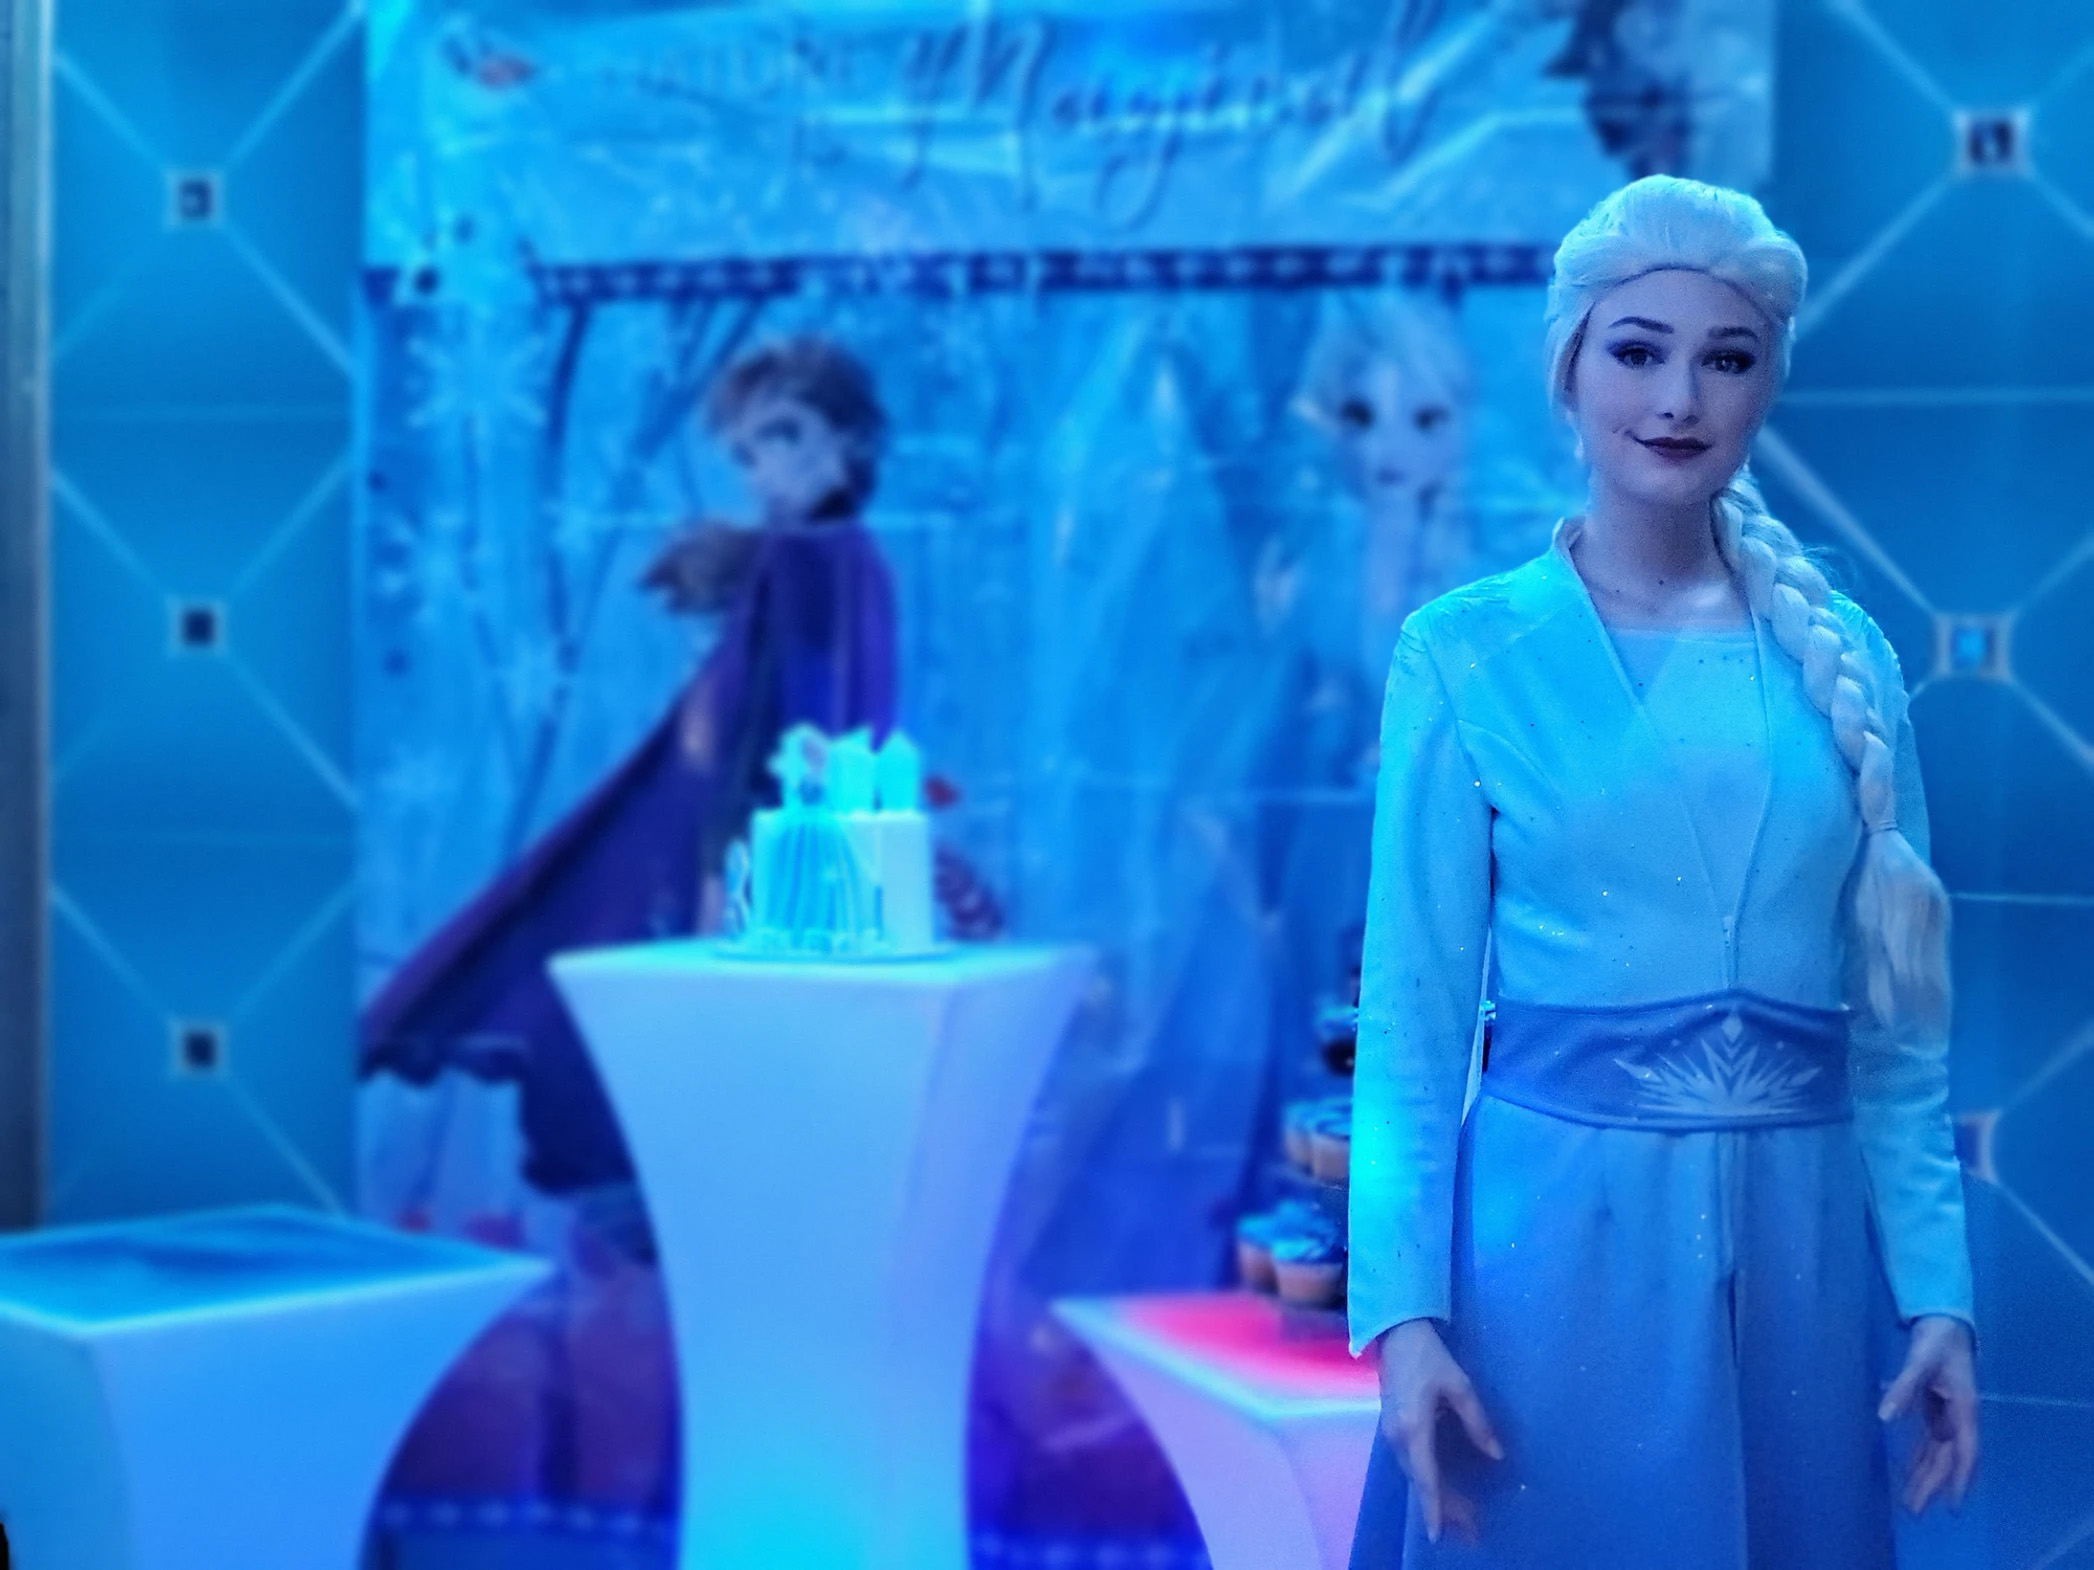 Elsa Impersonator